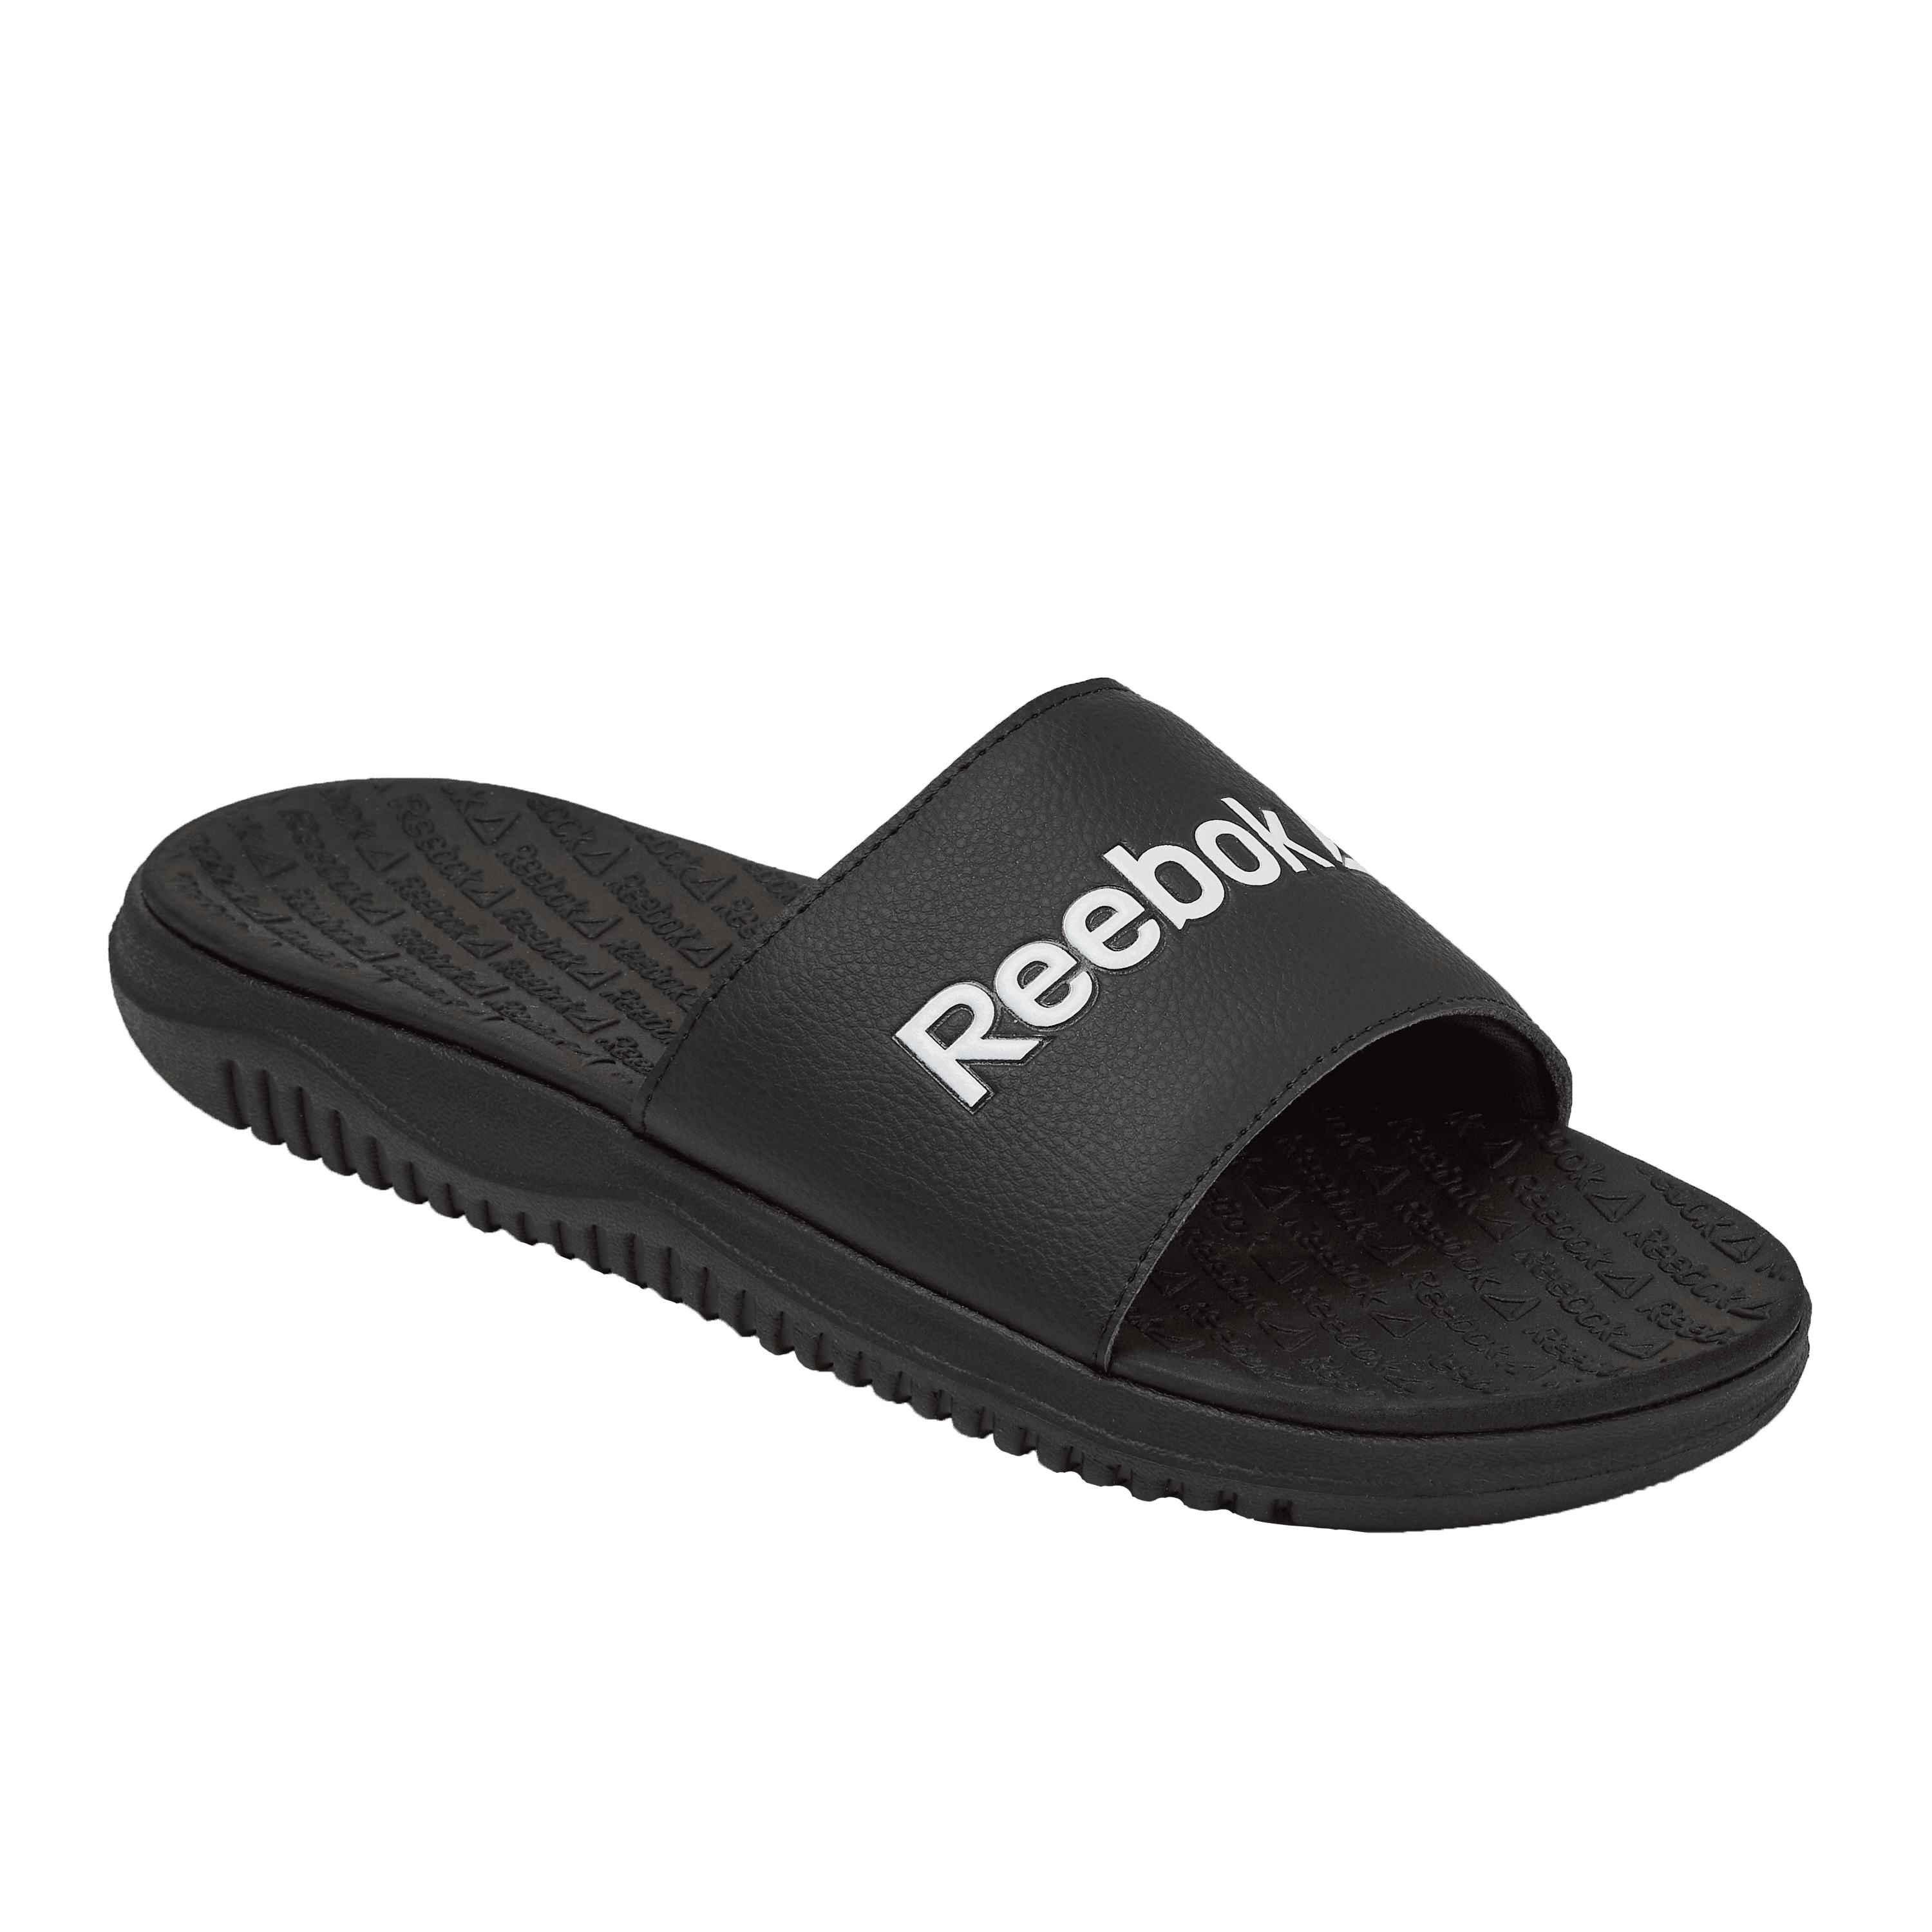 Reebok Women's Dual Density Slip-On Slides, Black and White - Walmart.com